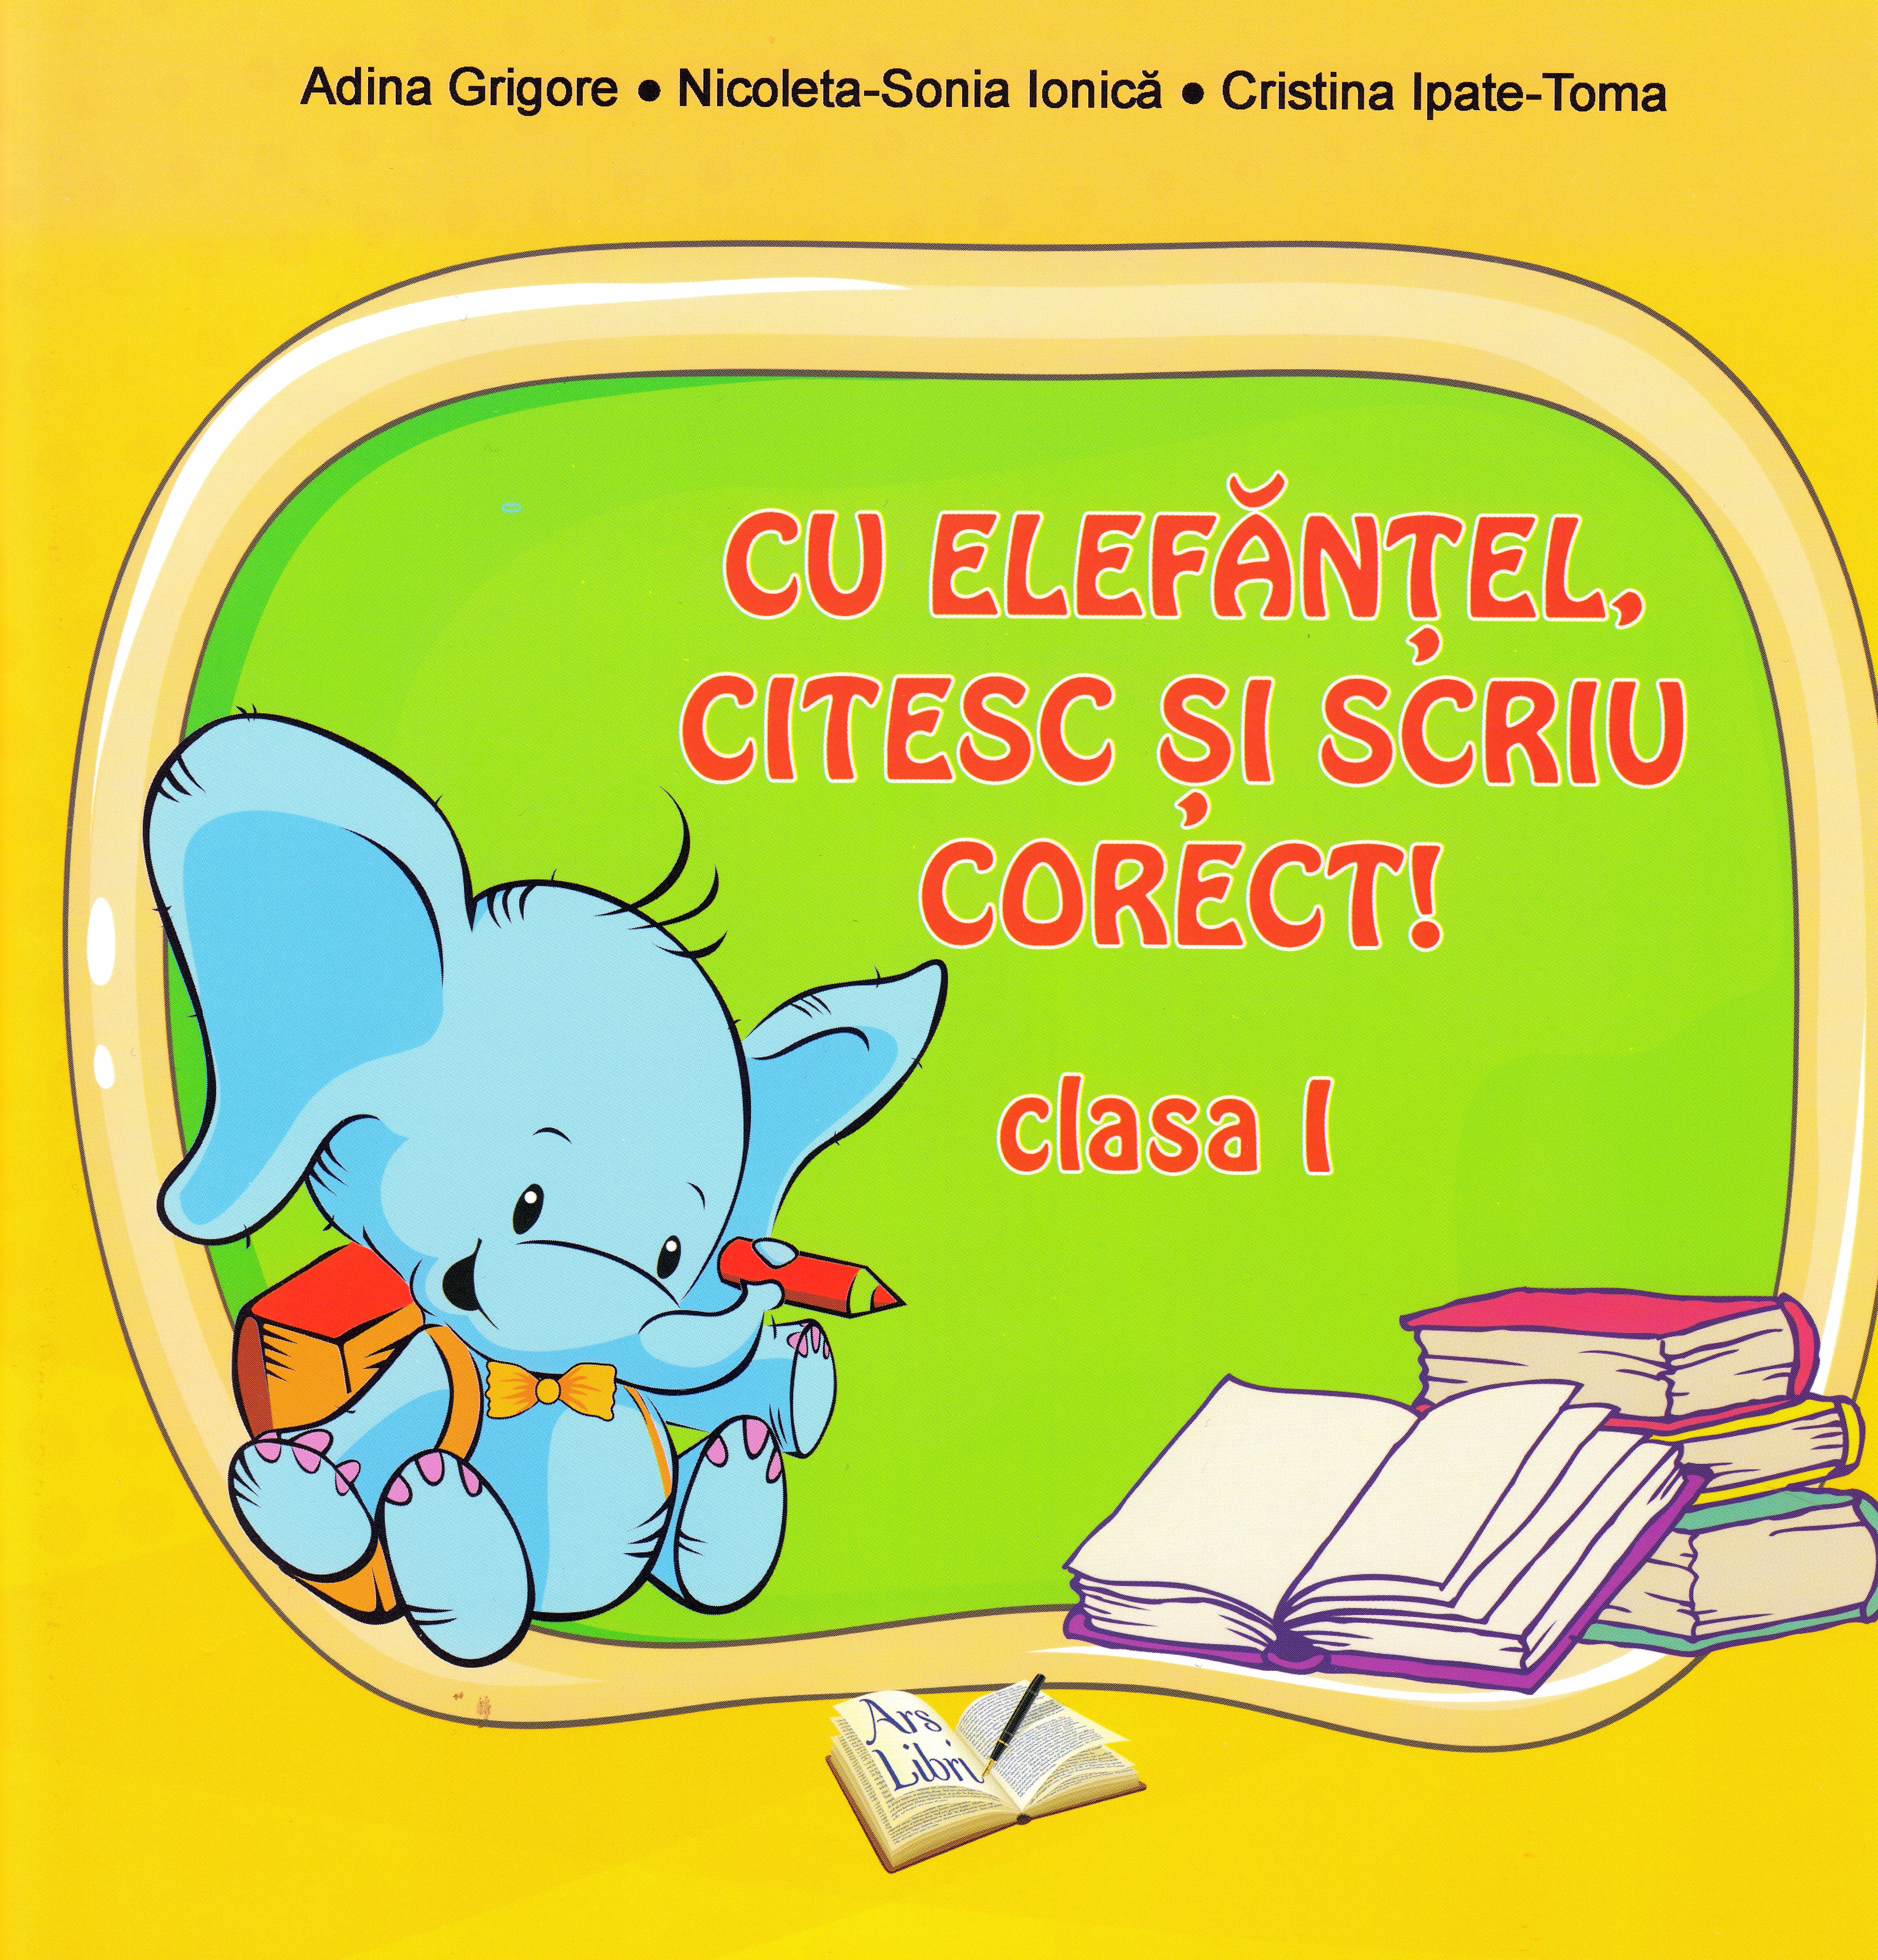 Cu Elefantel, citesc si scriu corect! - Clasa 1 - Adina Arigore